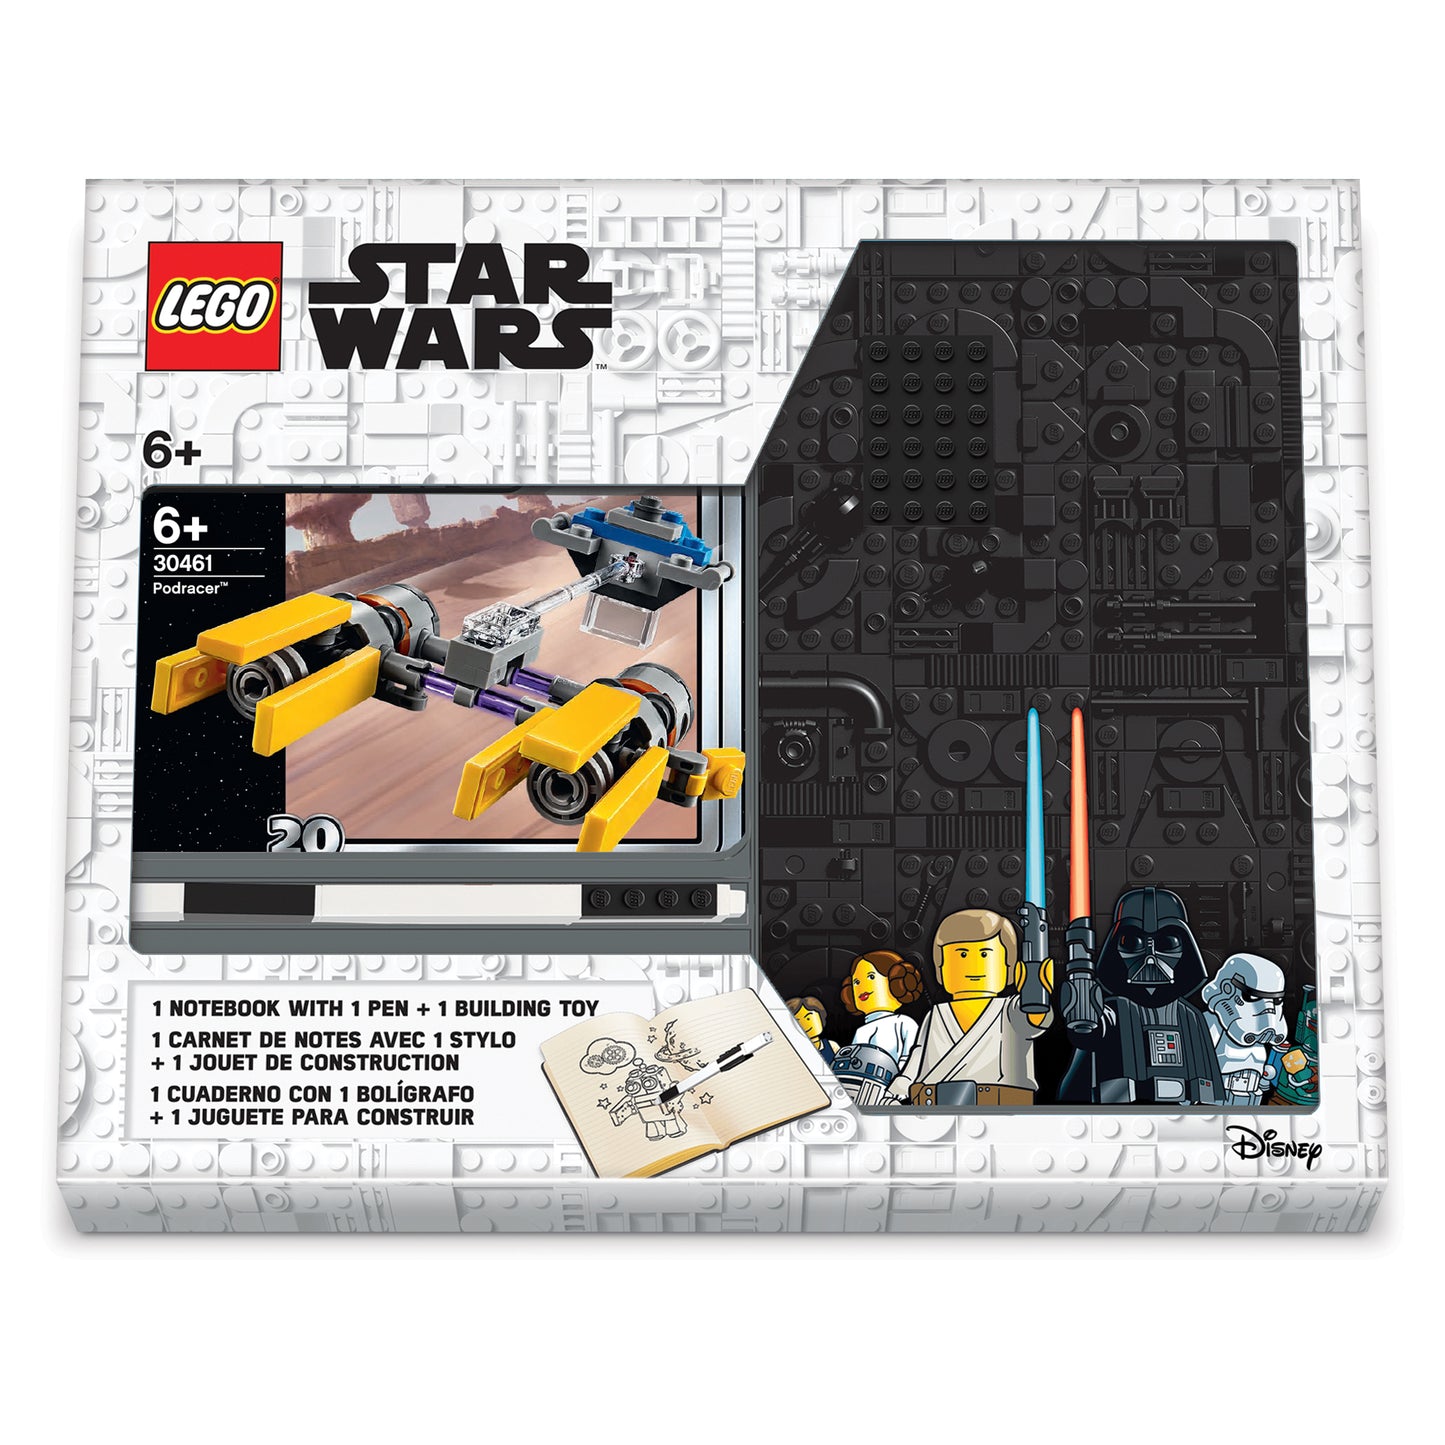 IQ LEGO® STAR WARS 2.0 Podracer Recruitment Bag Stationery Set (52527)